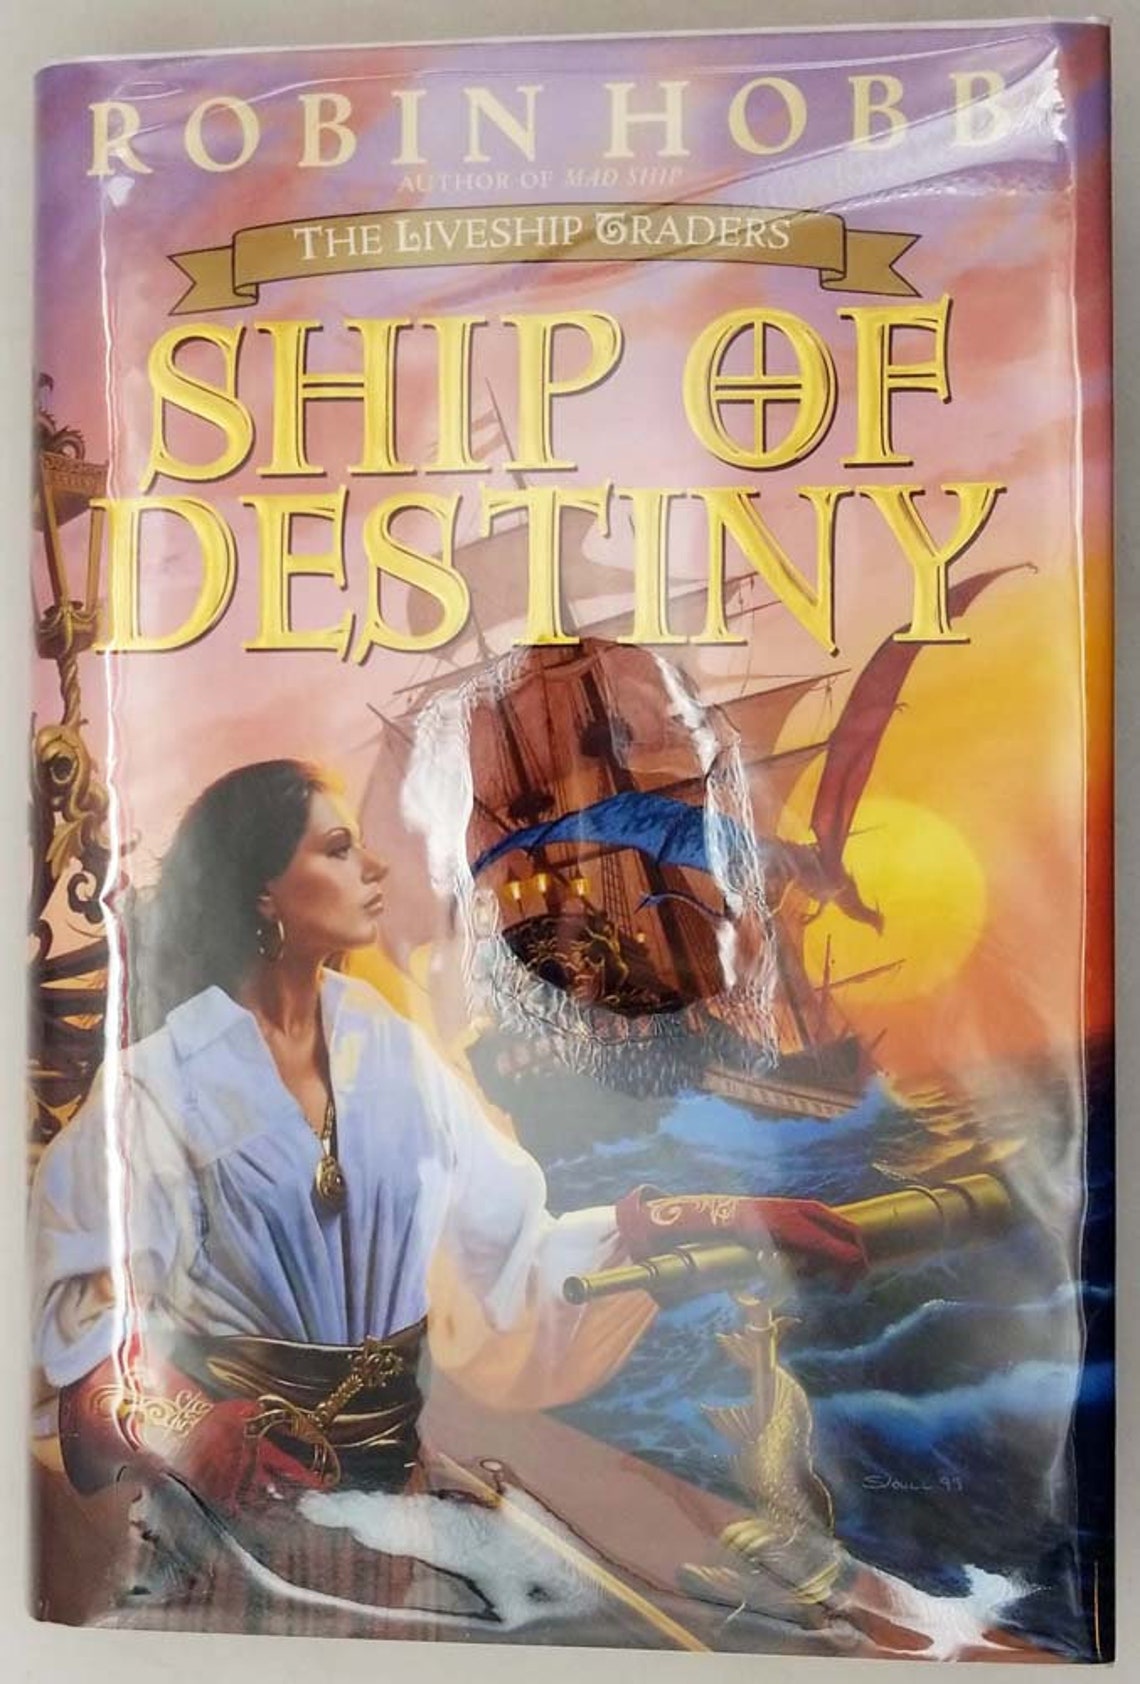 ship of destiny by robin hobb